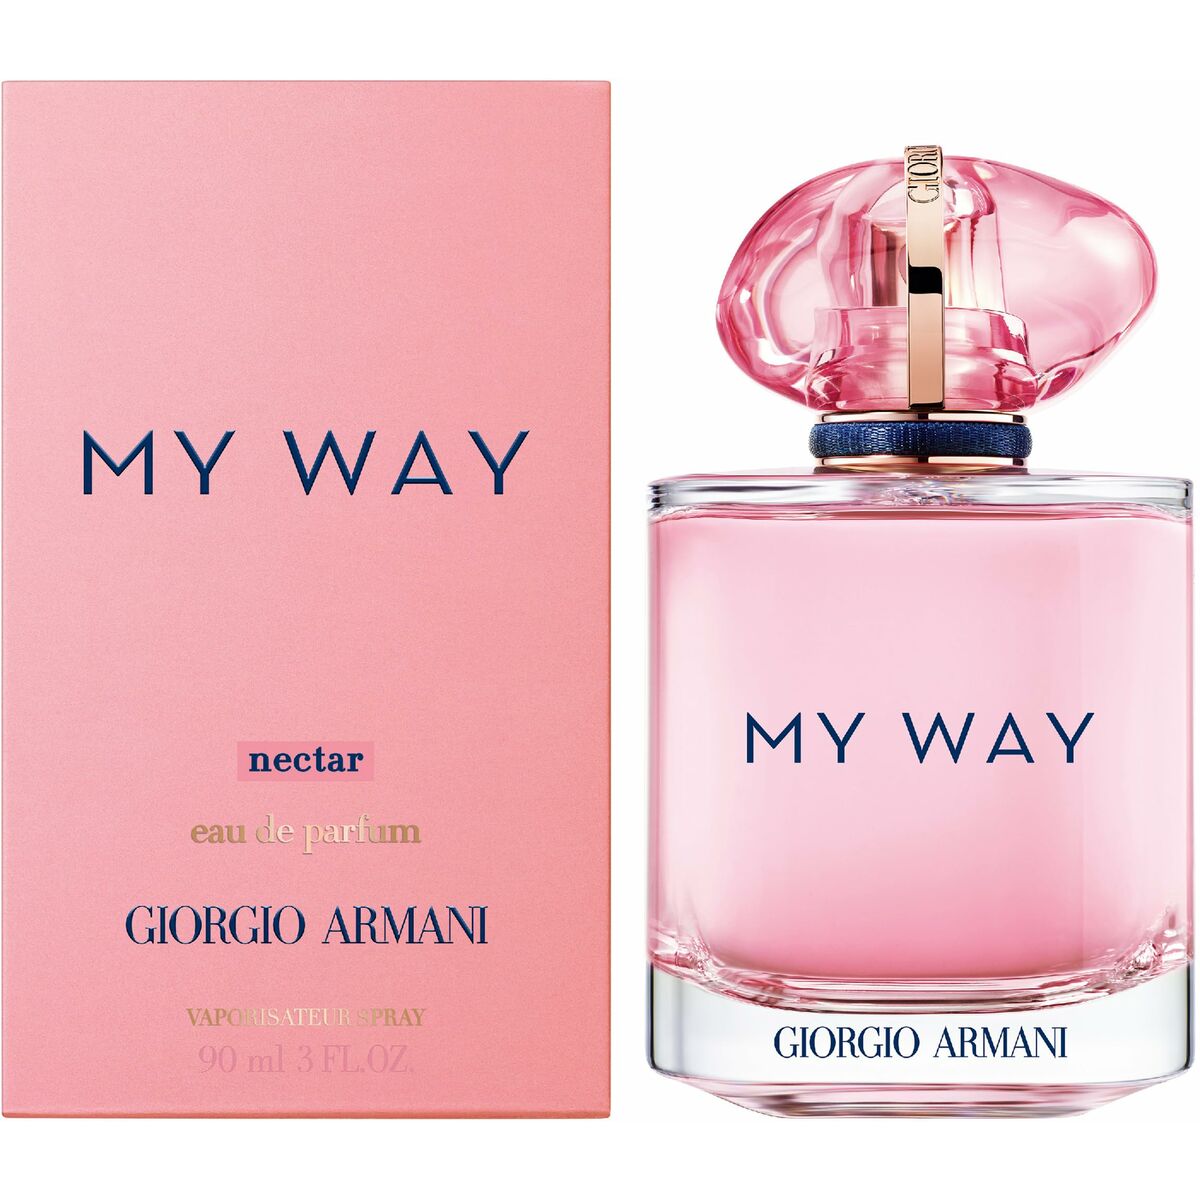 Parfum Femme Giorgio Armani My Way Nectar EDP 90 ml